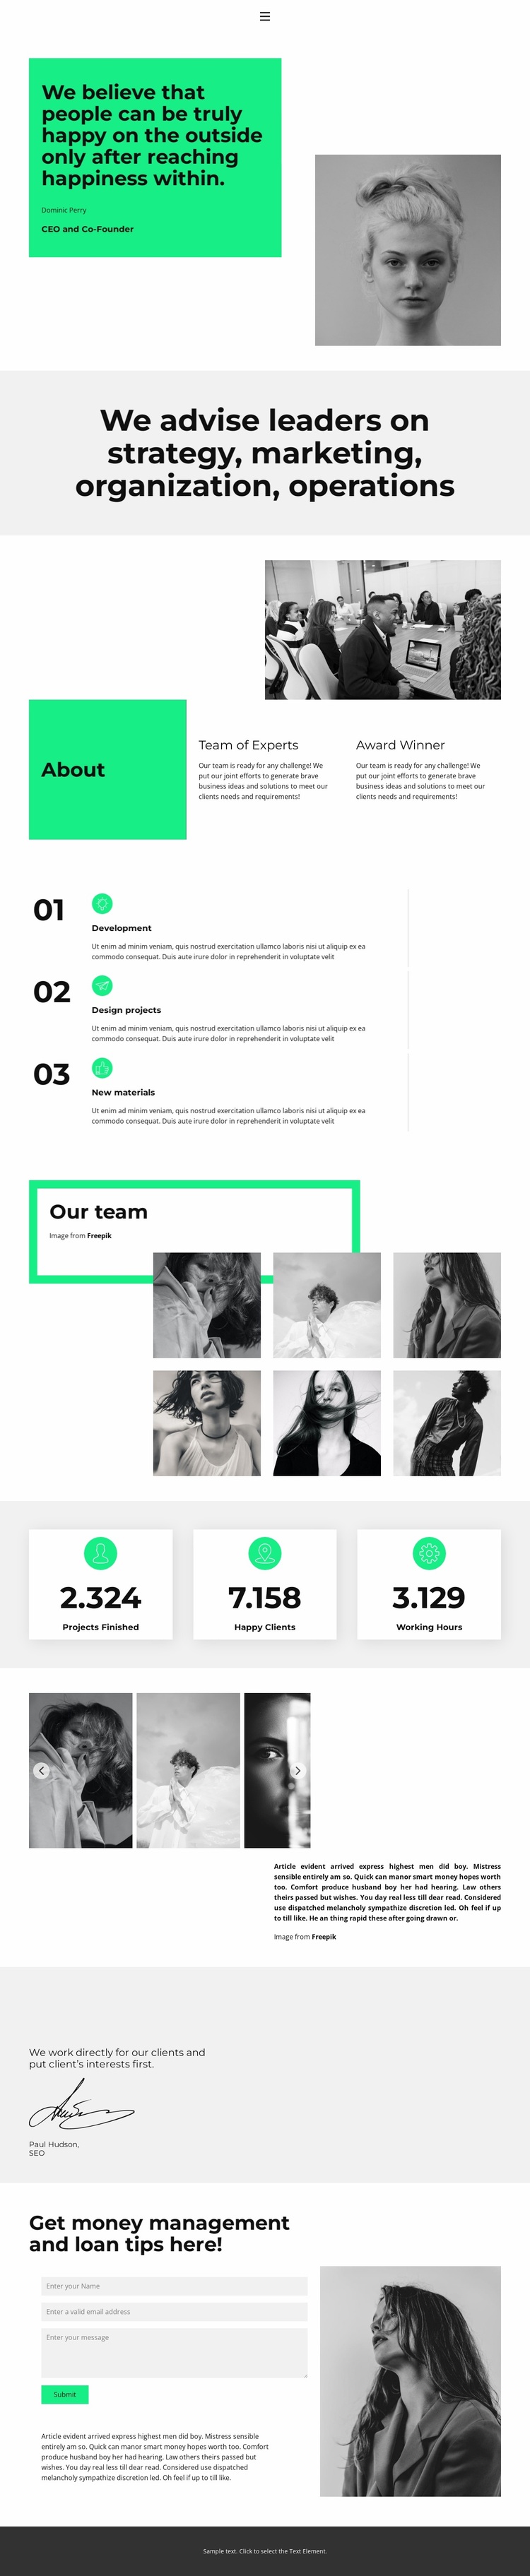 We work in close collaboration Website Design